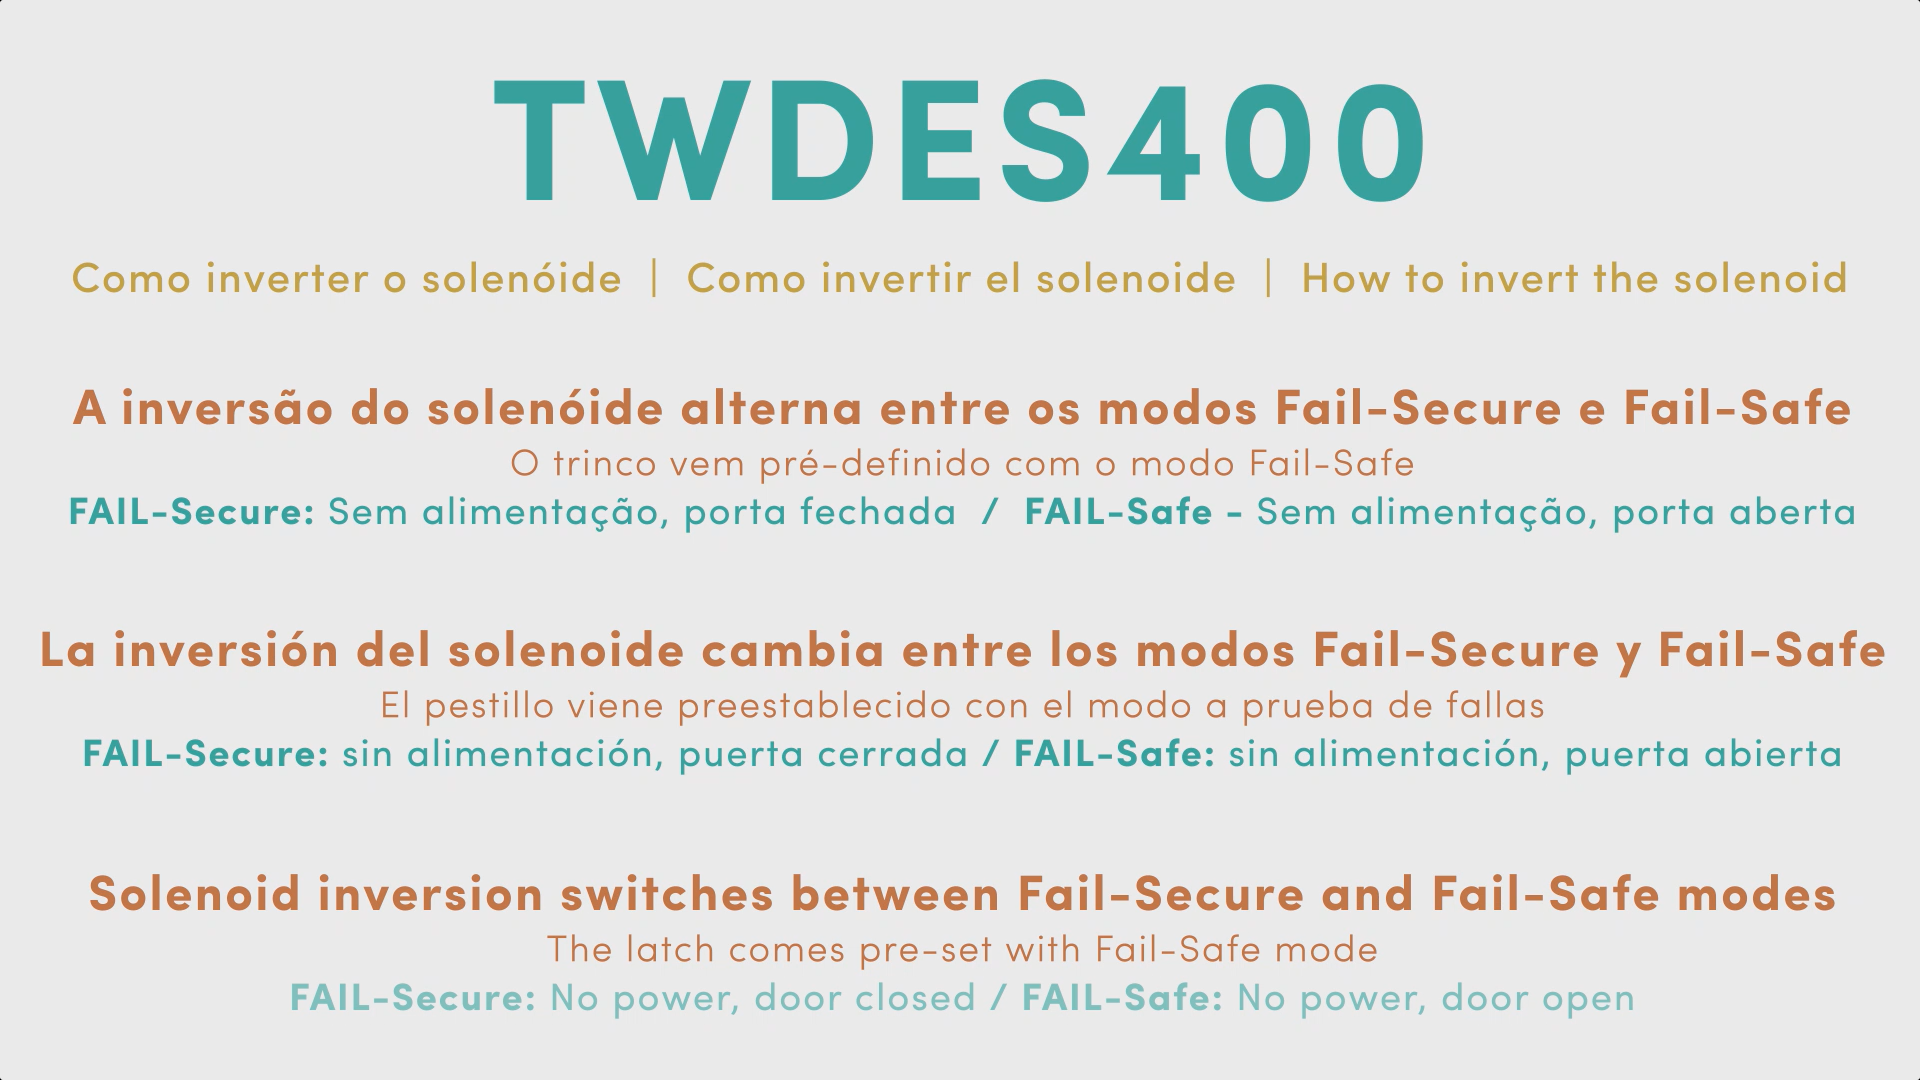 TWDES400 - Solenoid Inversion Video